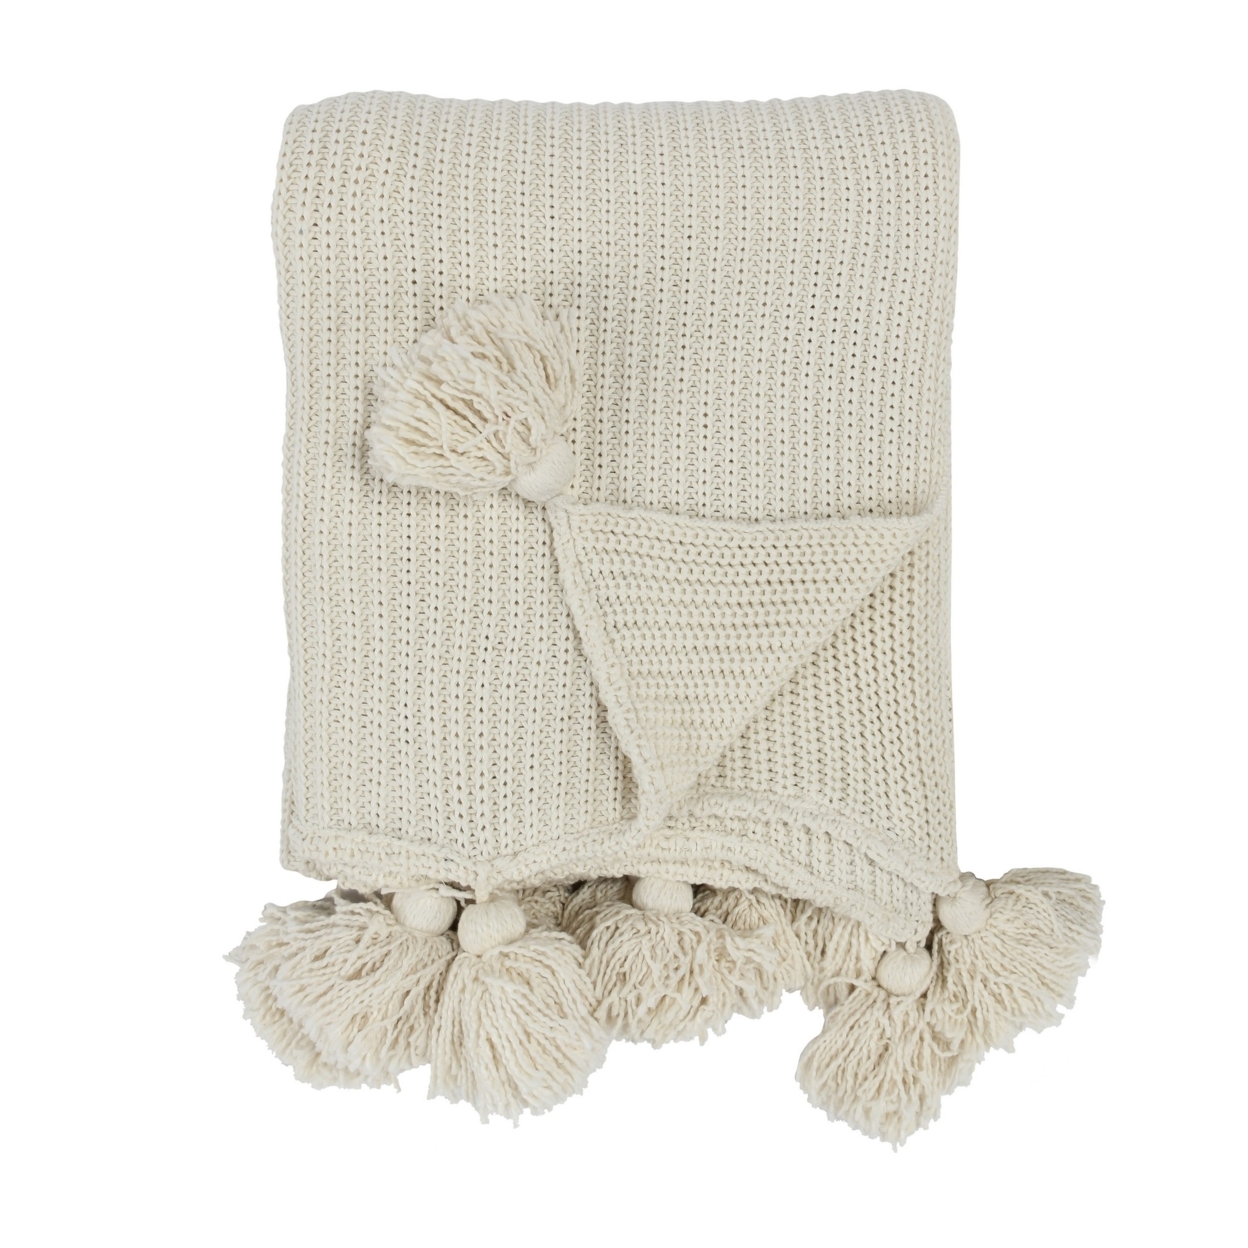 Dee 50 X 70 Soft Cotton Throw Blanket, Knitted Design, Woven Tassels, Ivory- Saltoro Sherpi